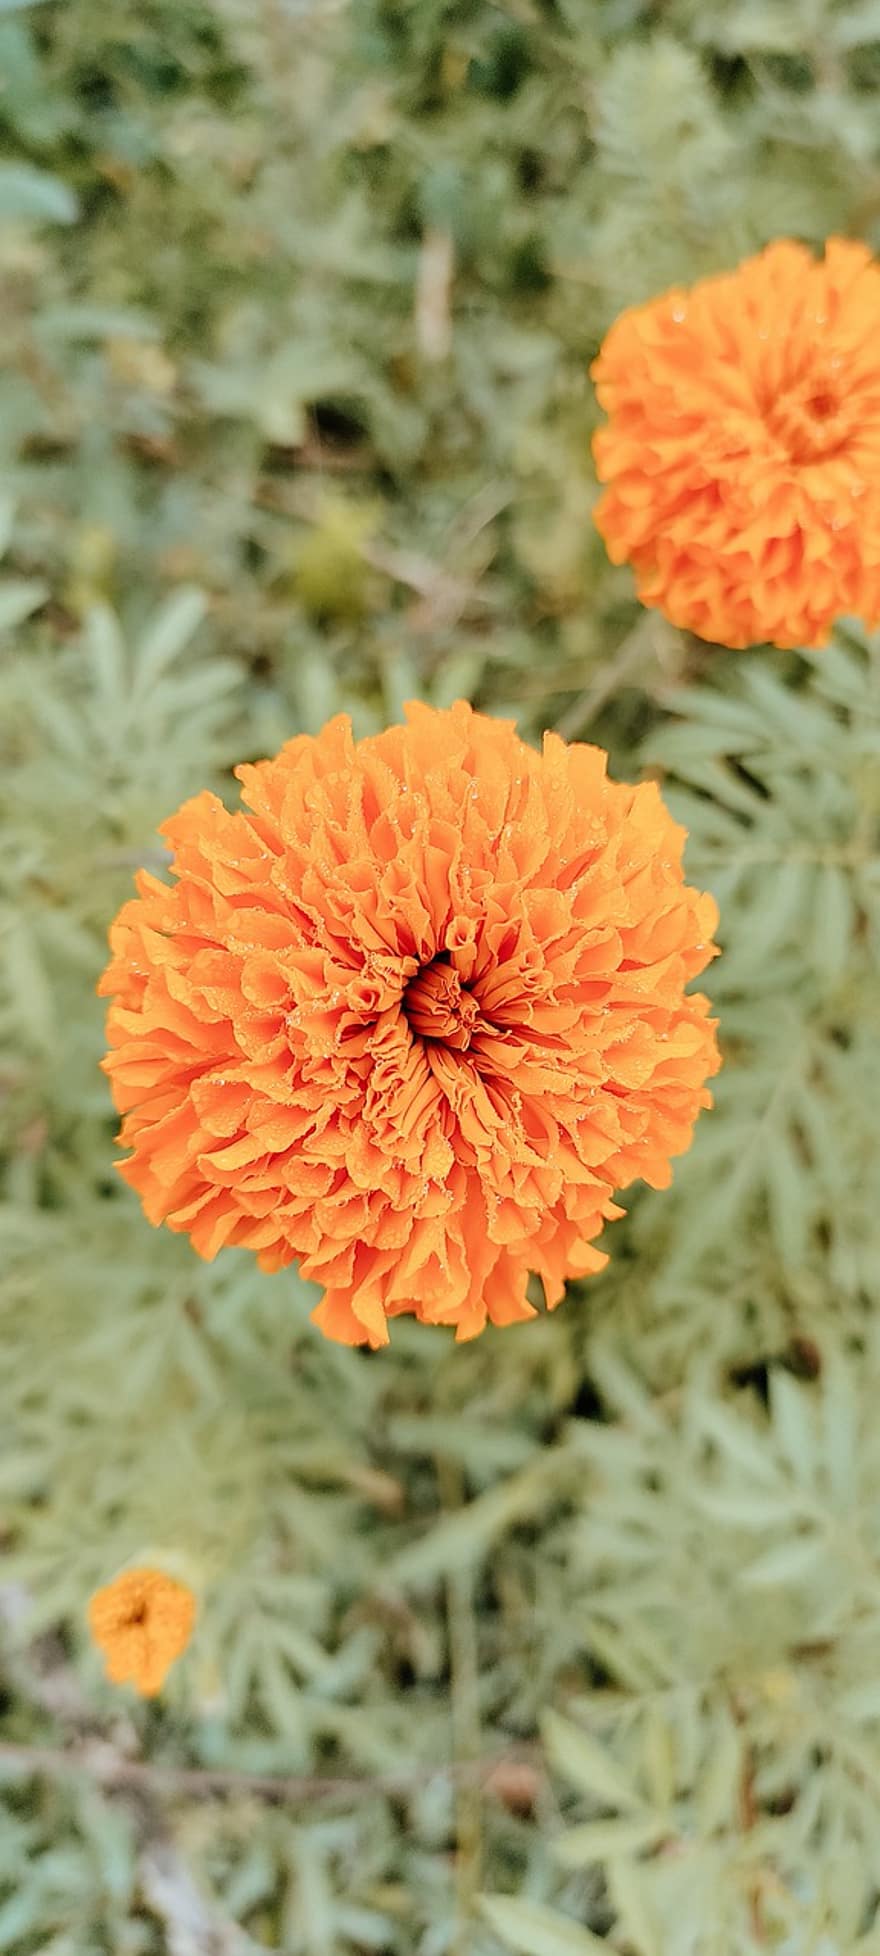 Marigolds, Orange Flowers, Garden, Autumn, plant, close-up, summer, flower, petal, flower head, yellow